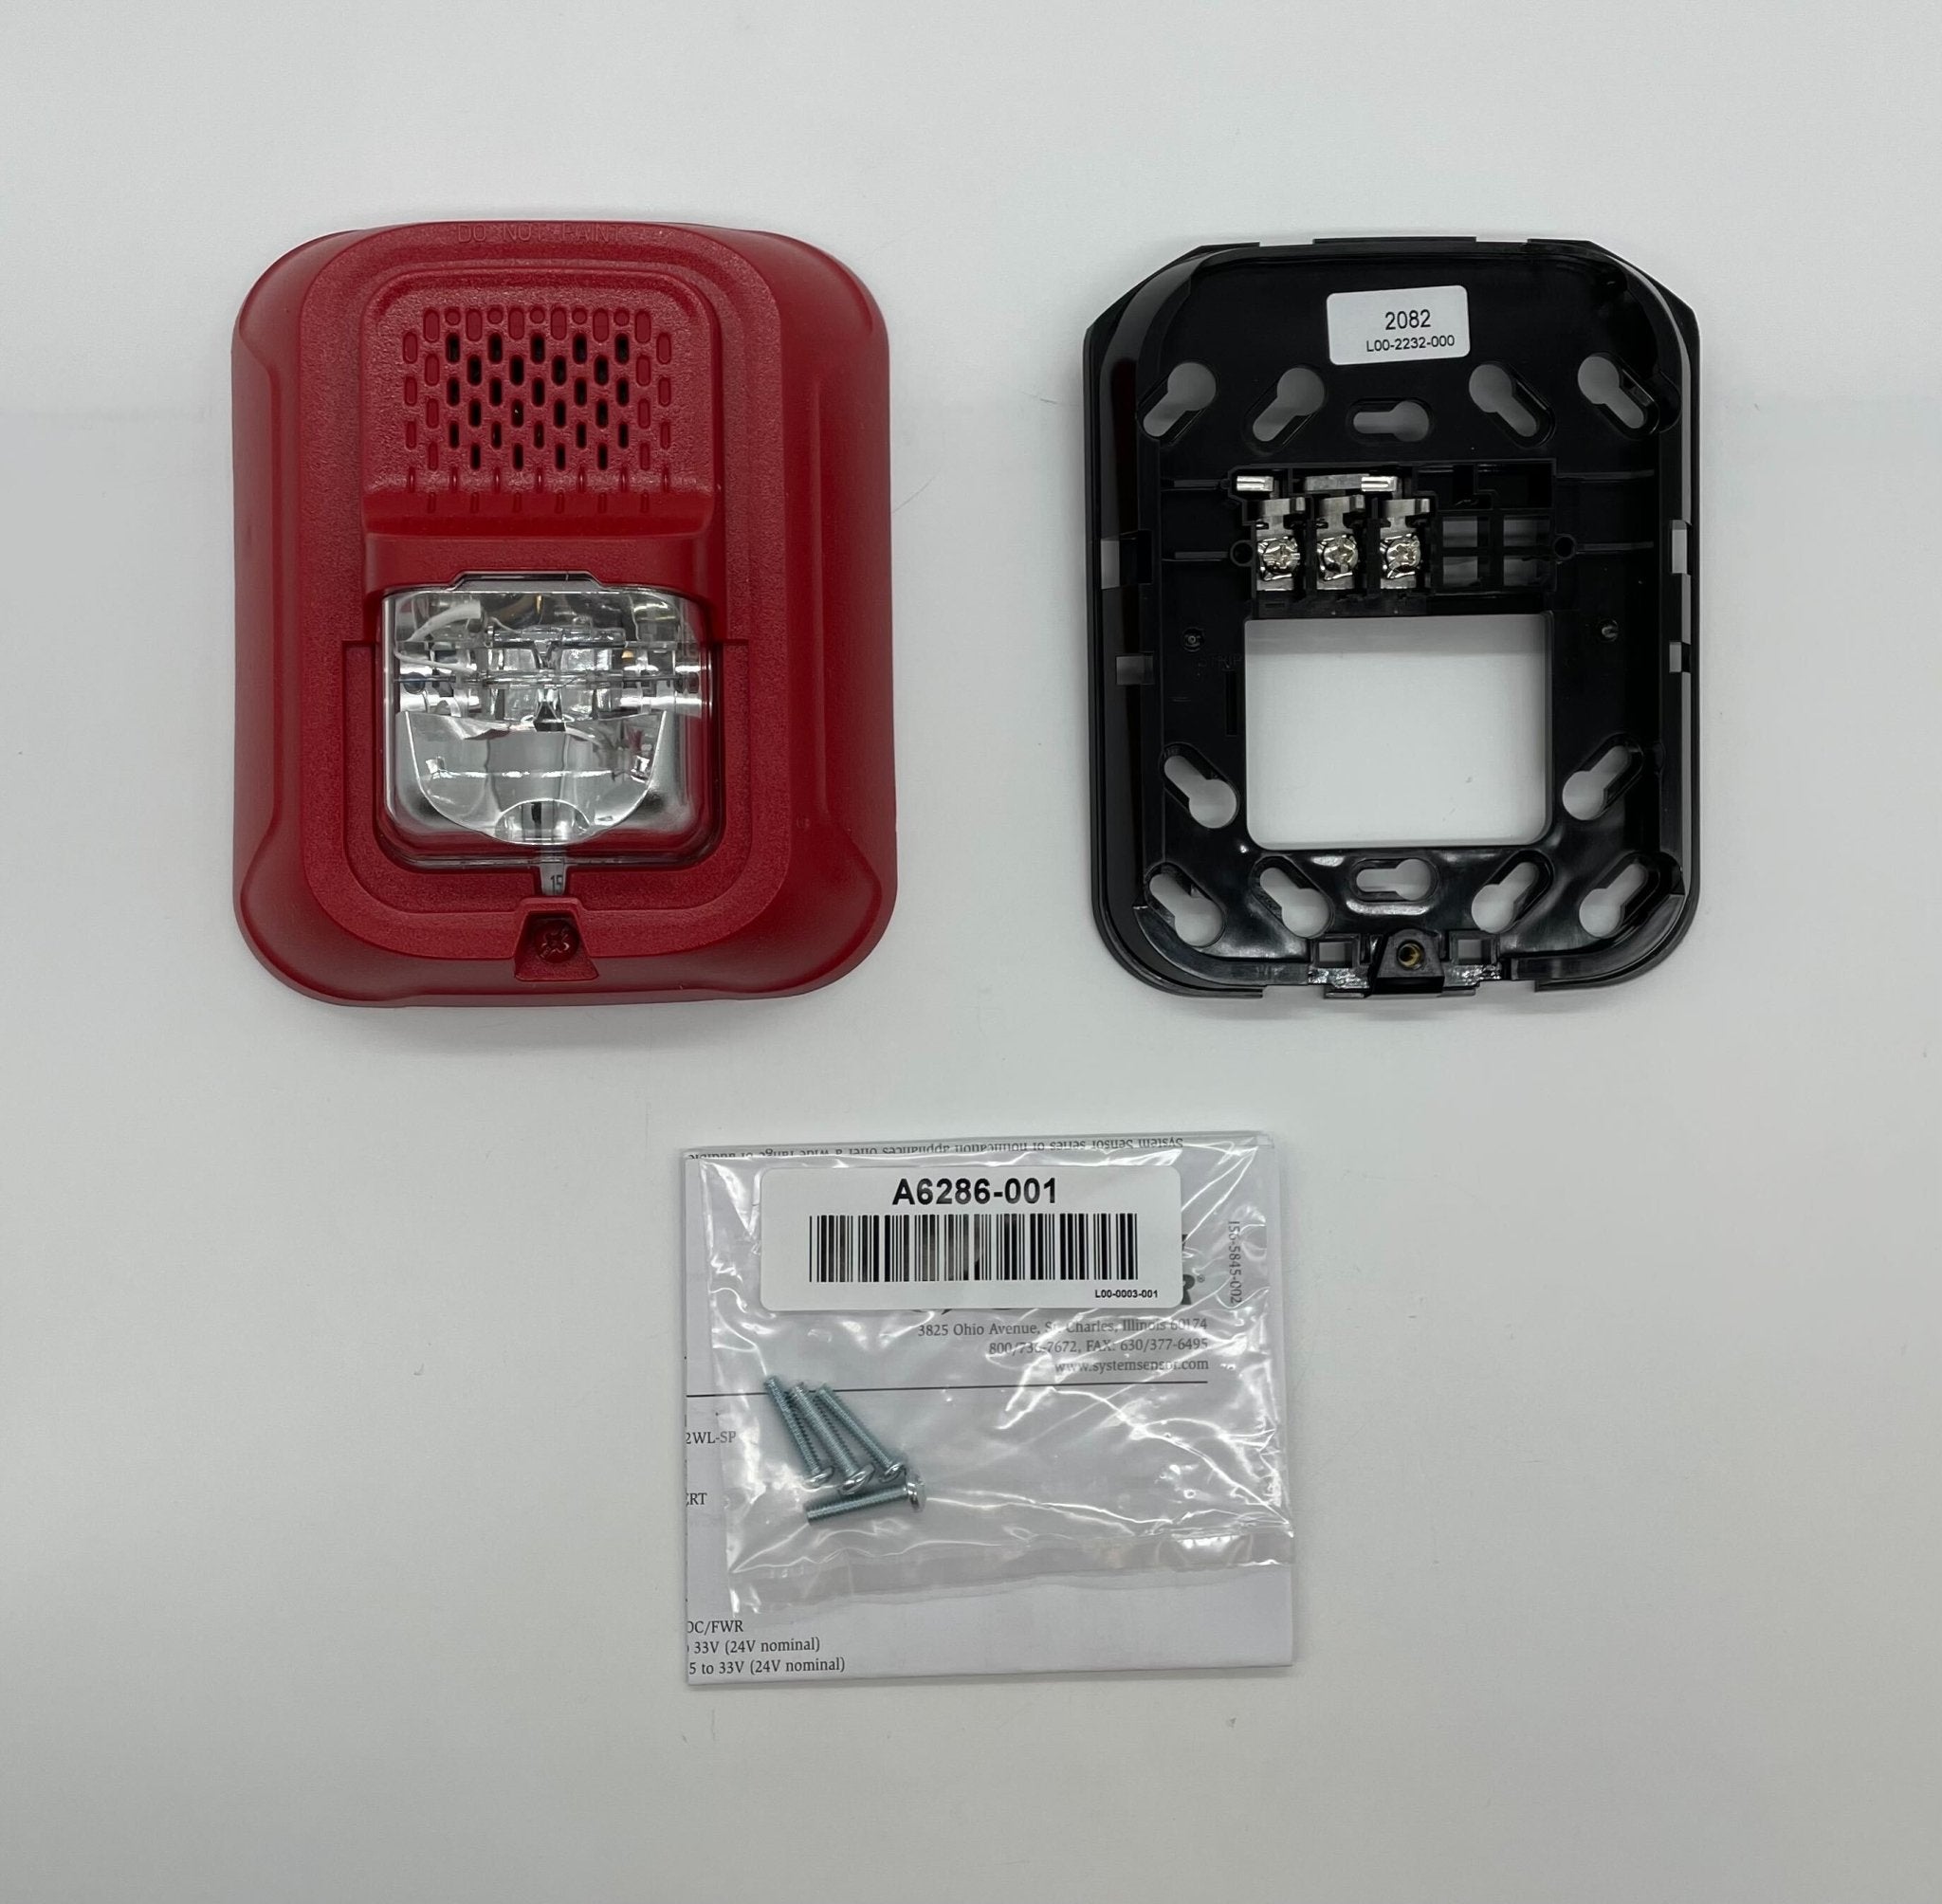 System Sensor CHSRL Chime/Strobe, 12/24 Volt - The Fire Alarm Supplier